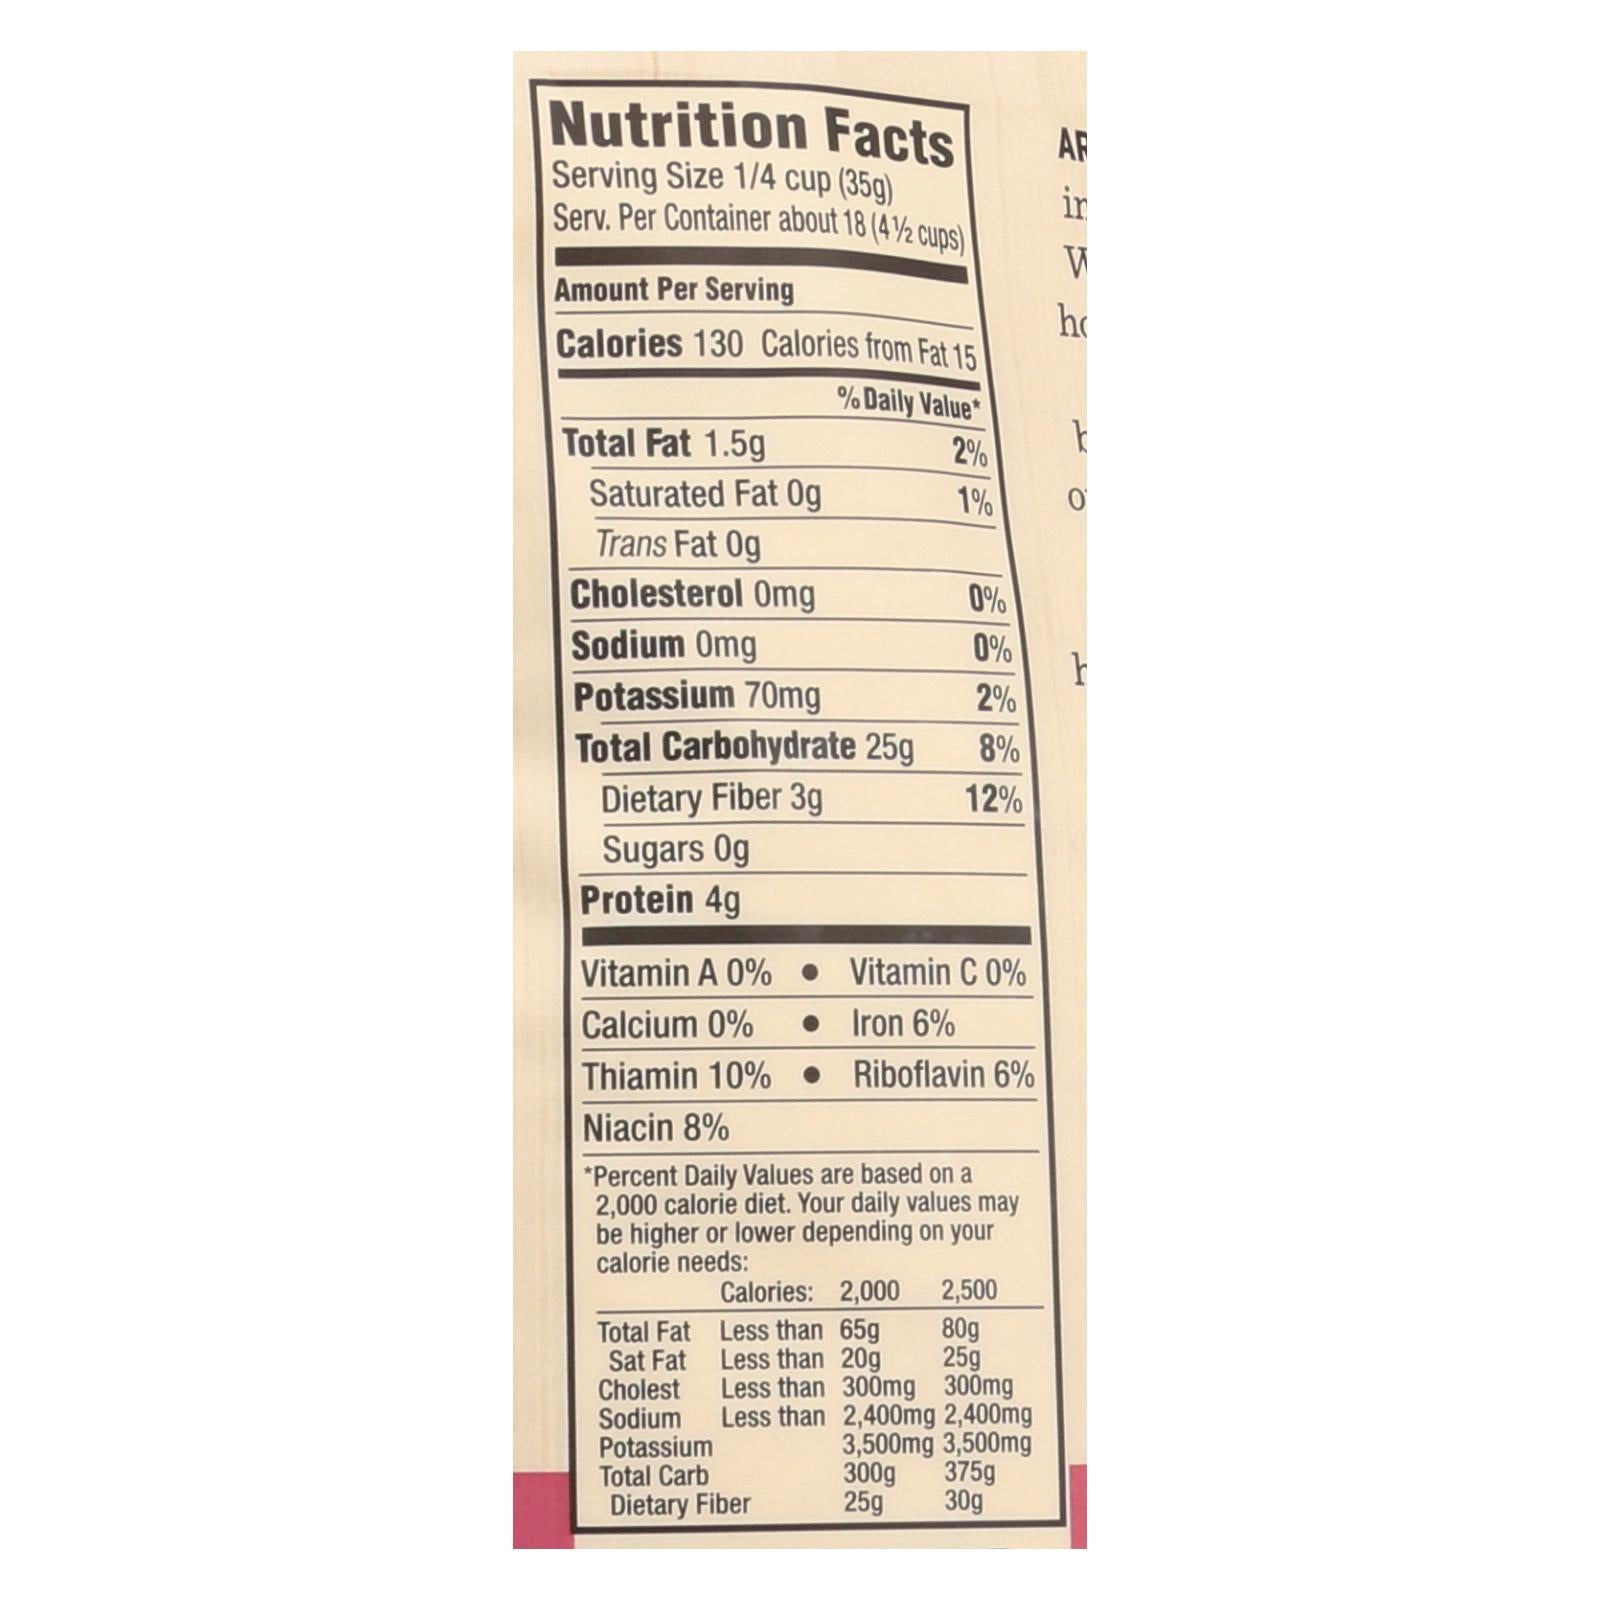 Arrowhead Mills, Arrowhead Mills - Organic Millet Flour - Gluten Free - Case of 6 - 23 oz. (Pack of 6)